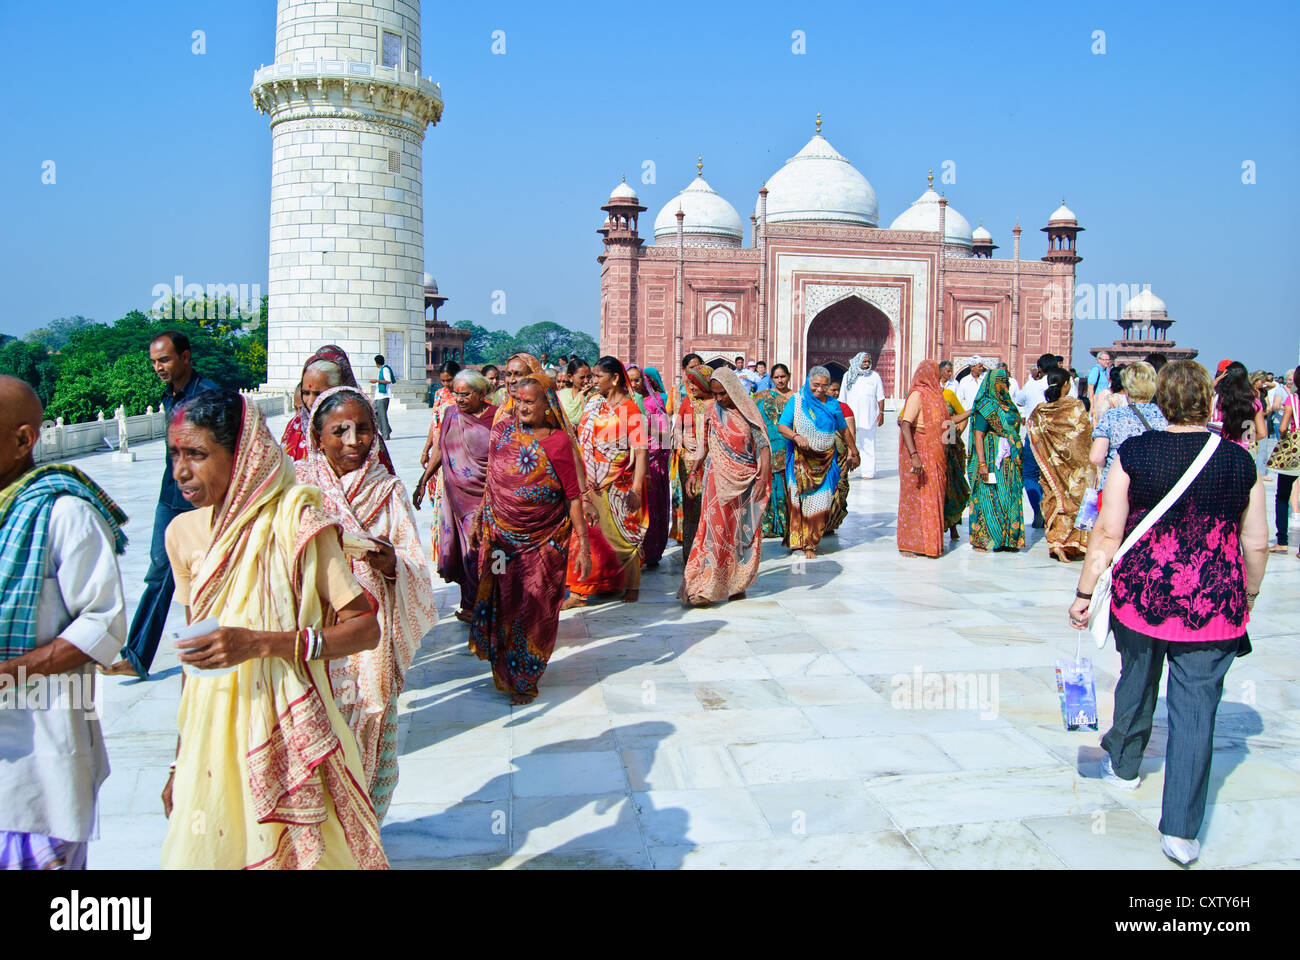 Indian i turisti in visita a Taj Mahal in variopinti costumi tradizionali Foto Stock